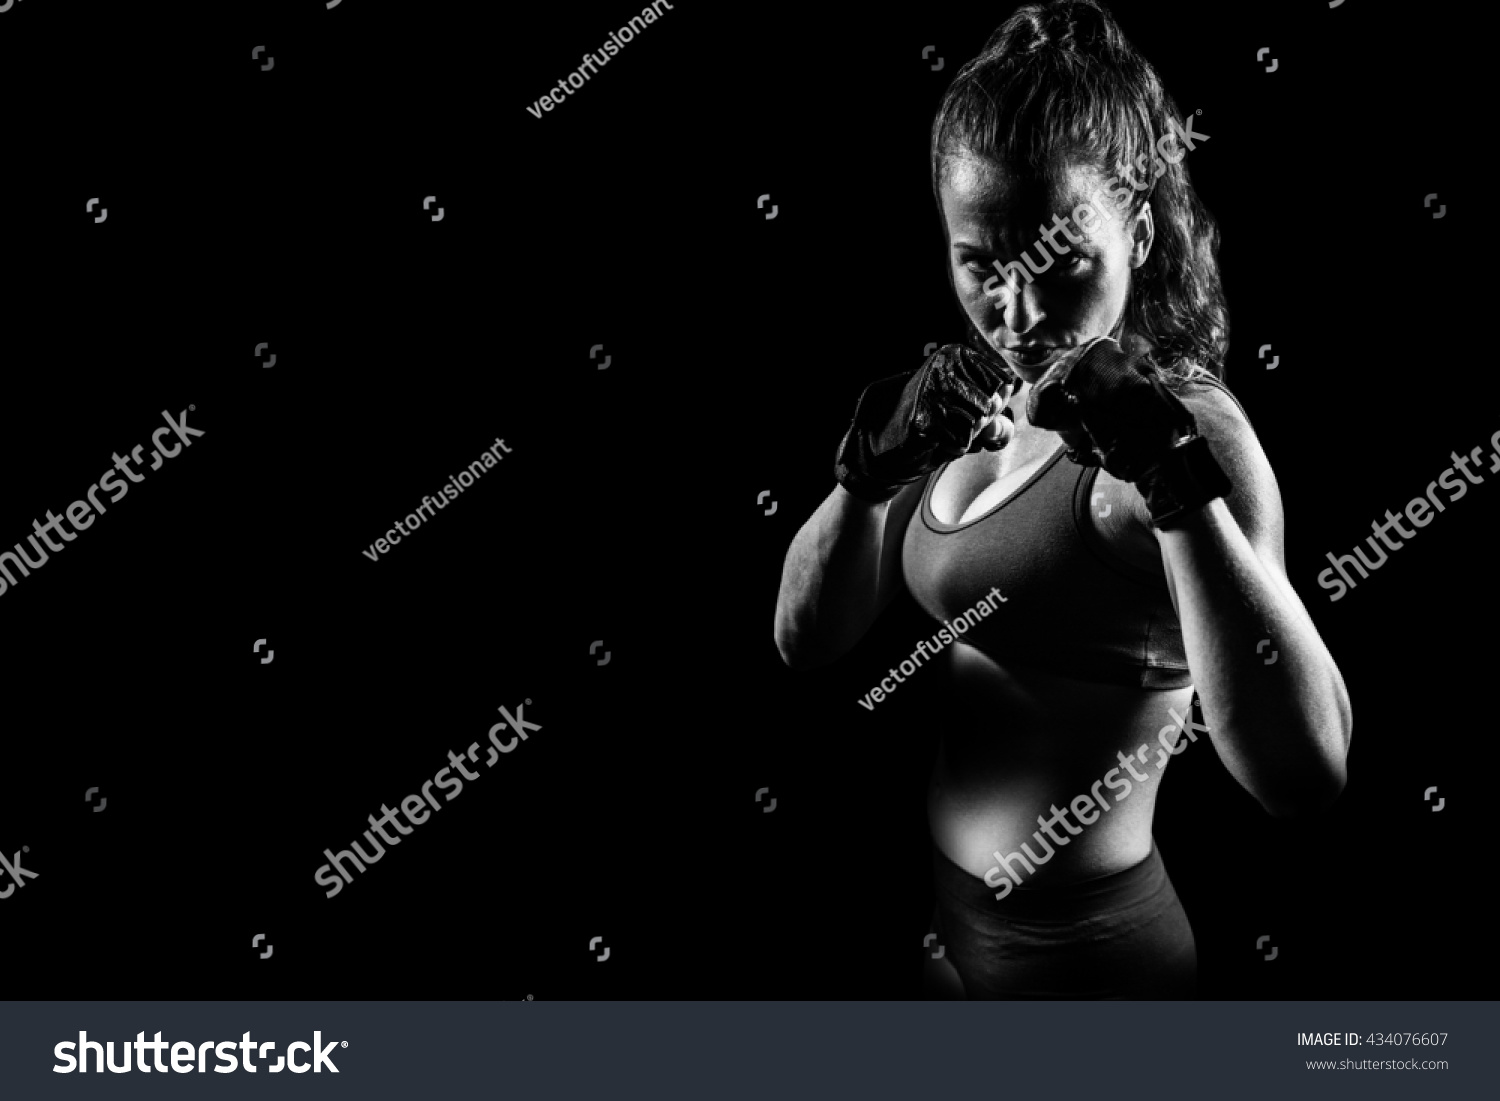 Fighting Woman Images Stock Photos Vectors Shutterstock